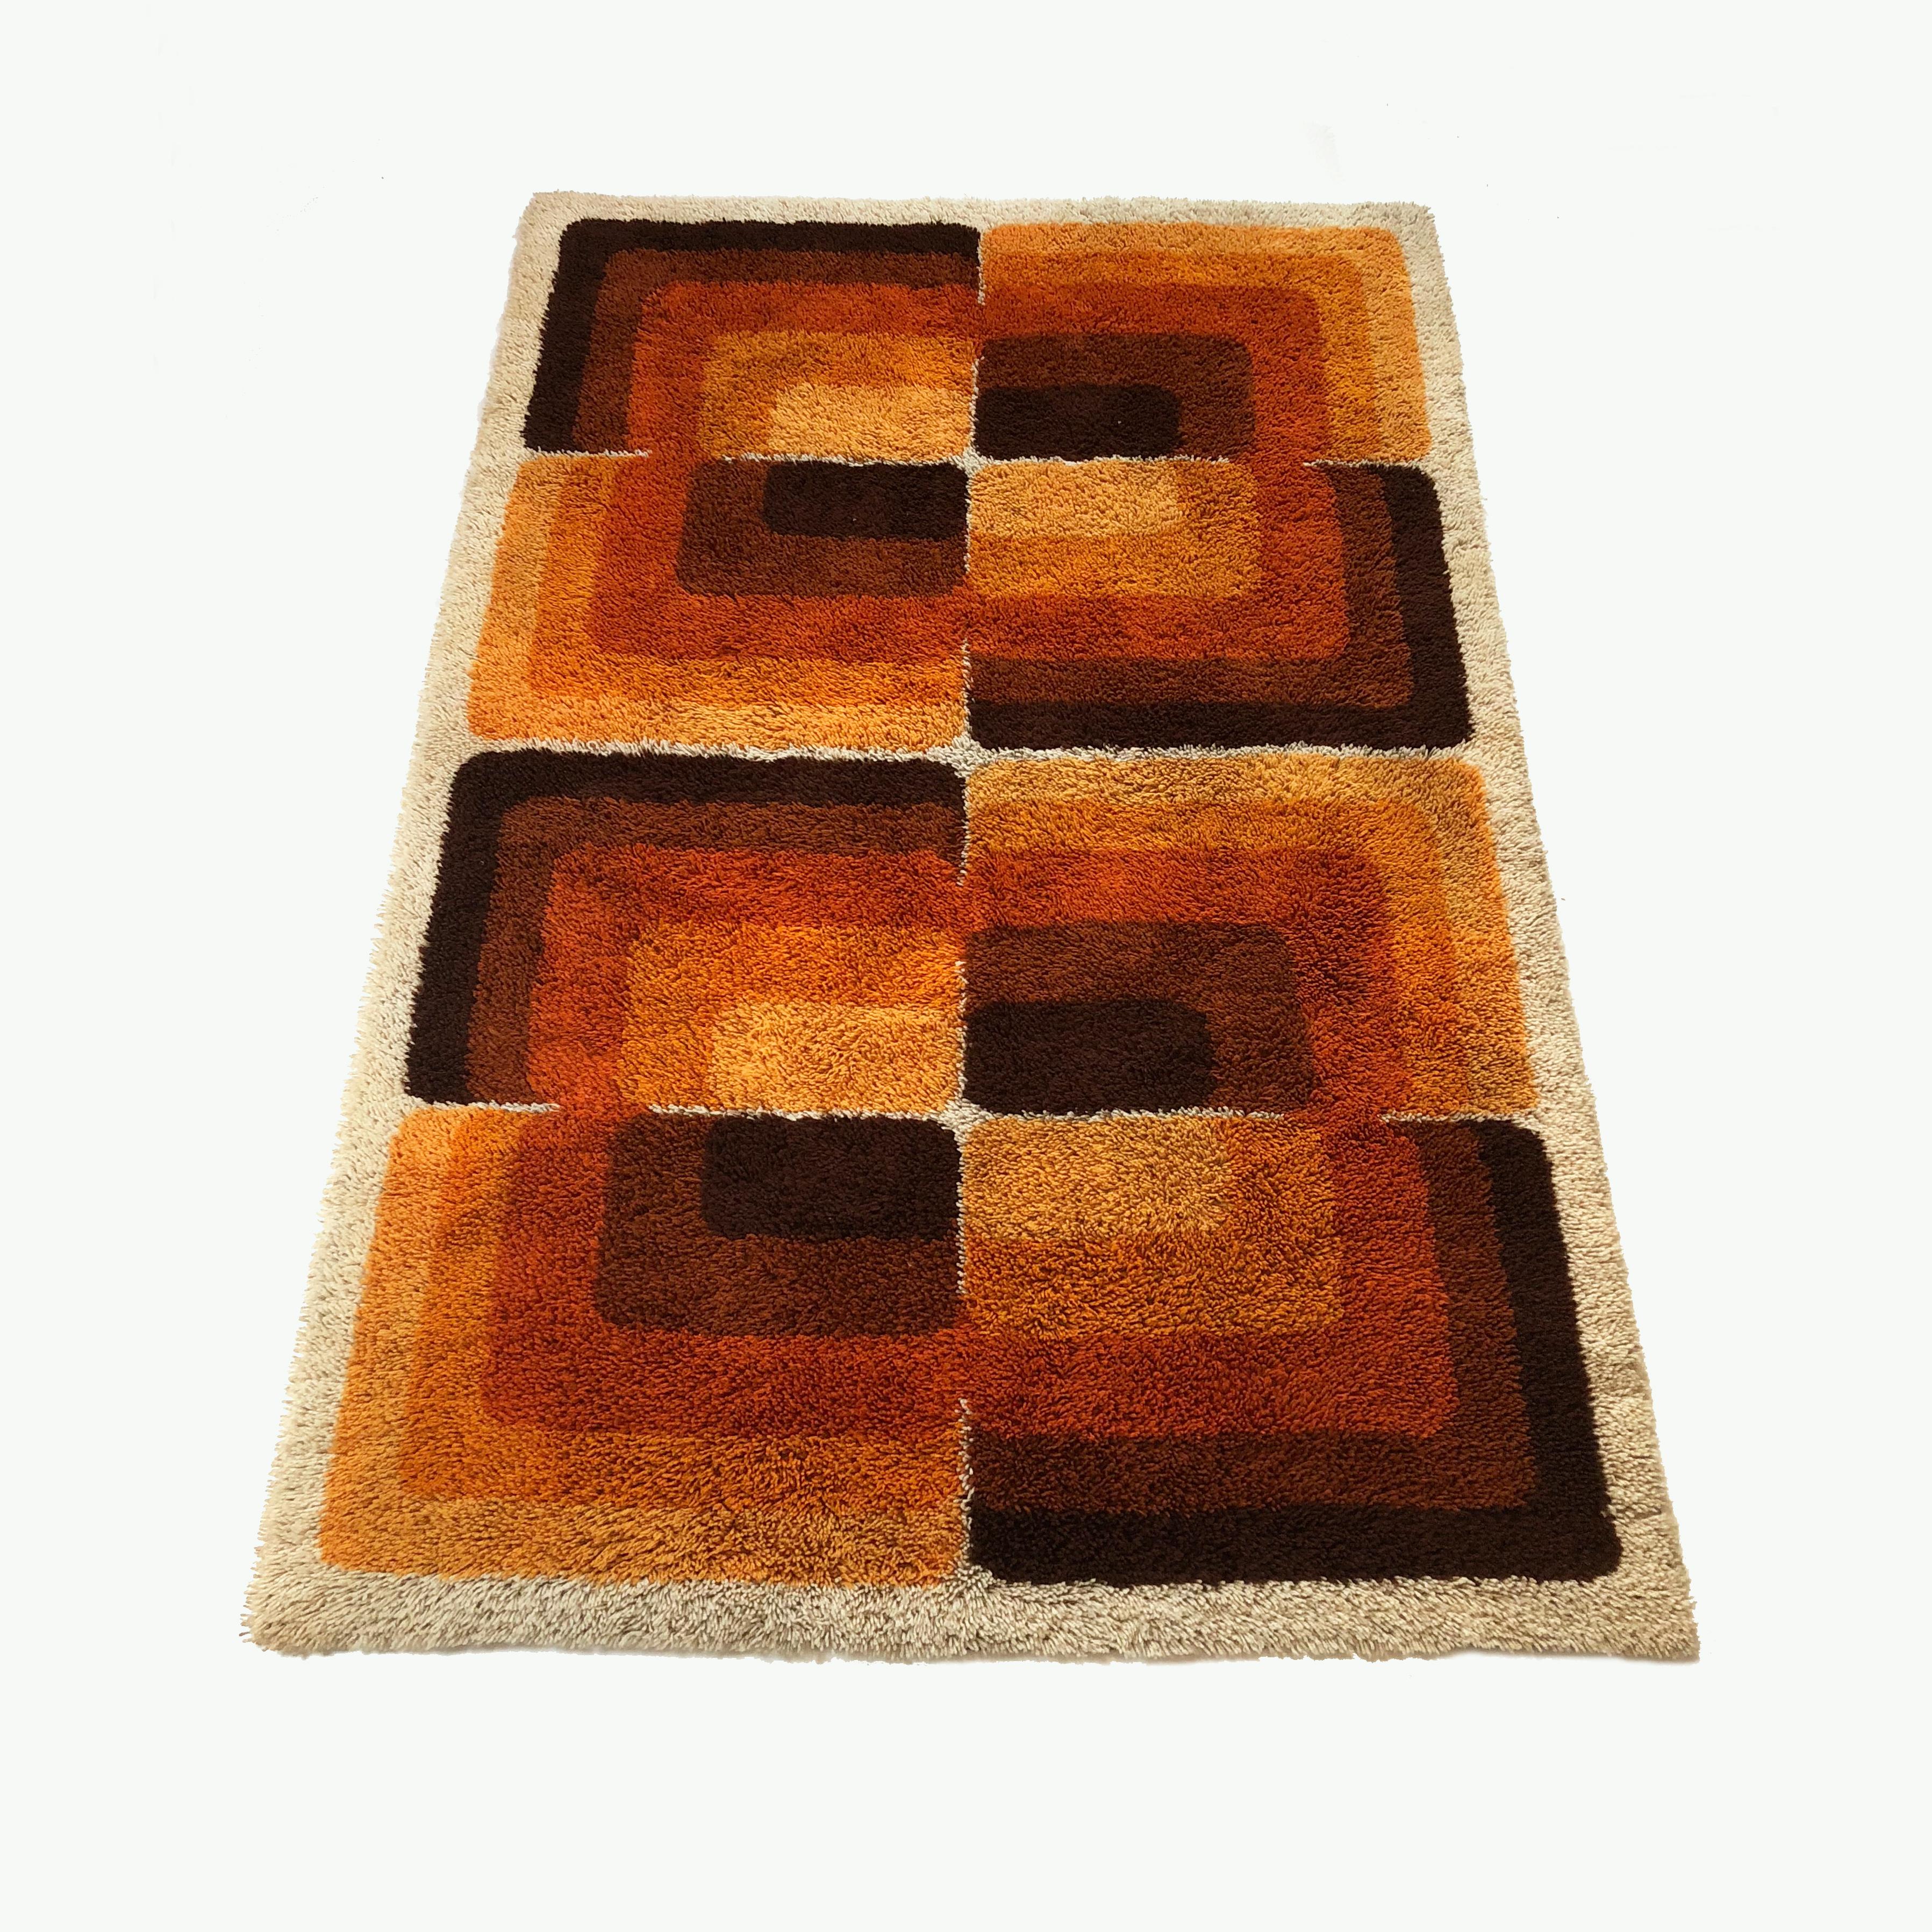 Article:

Original huge high pile rug multi-color 